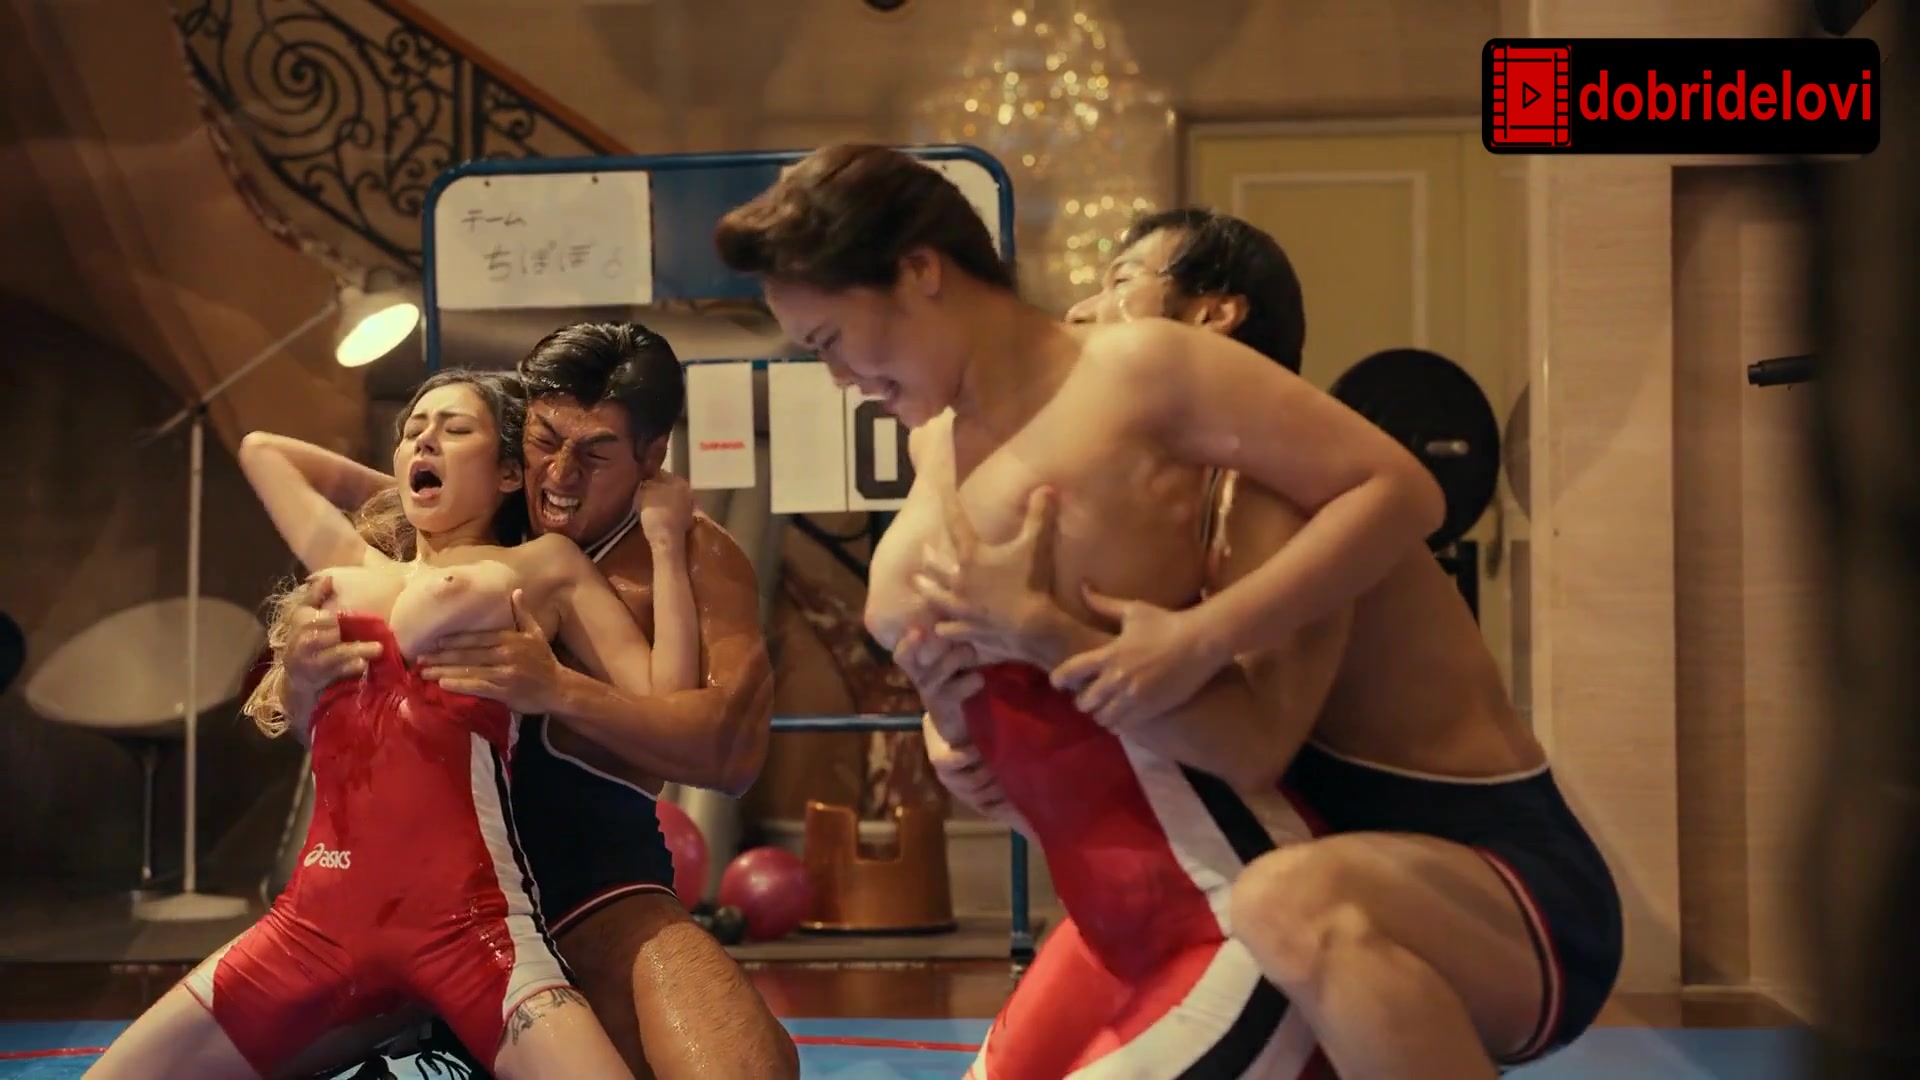 Moemi Katayama wrestling scene from The Naked Director video image